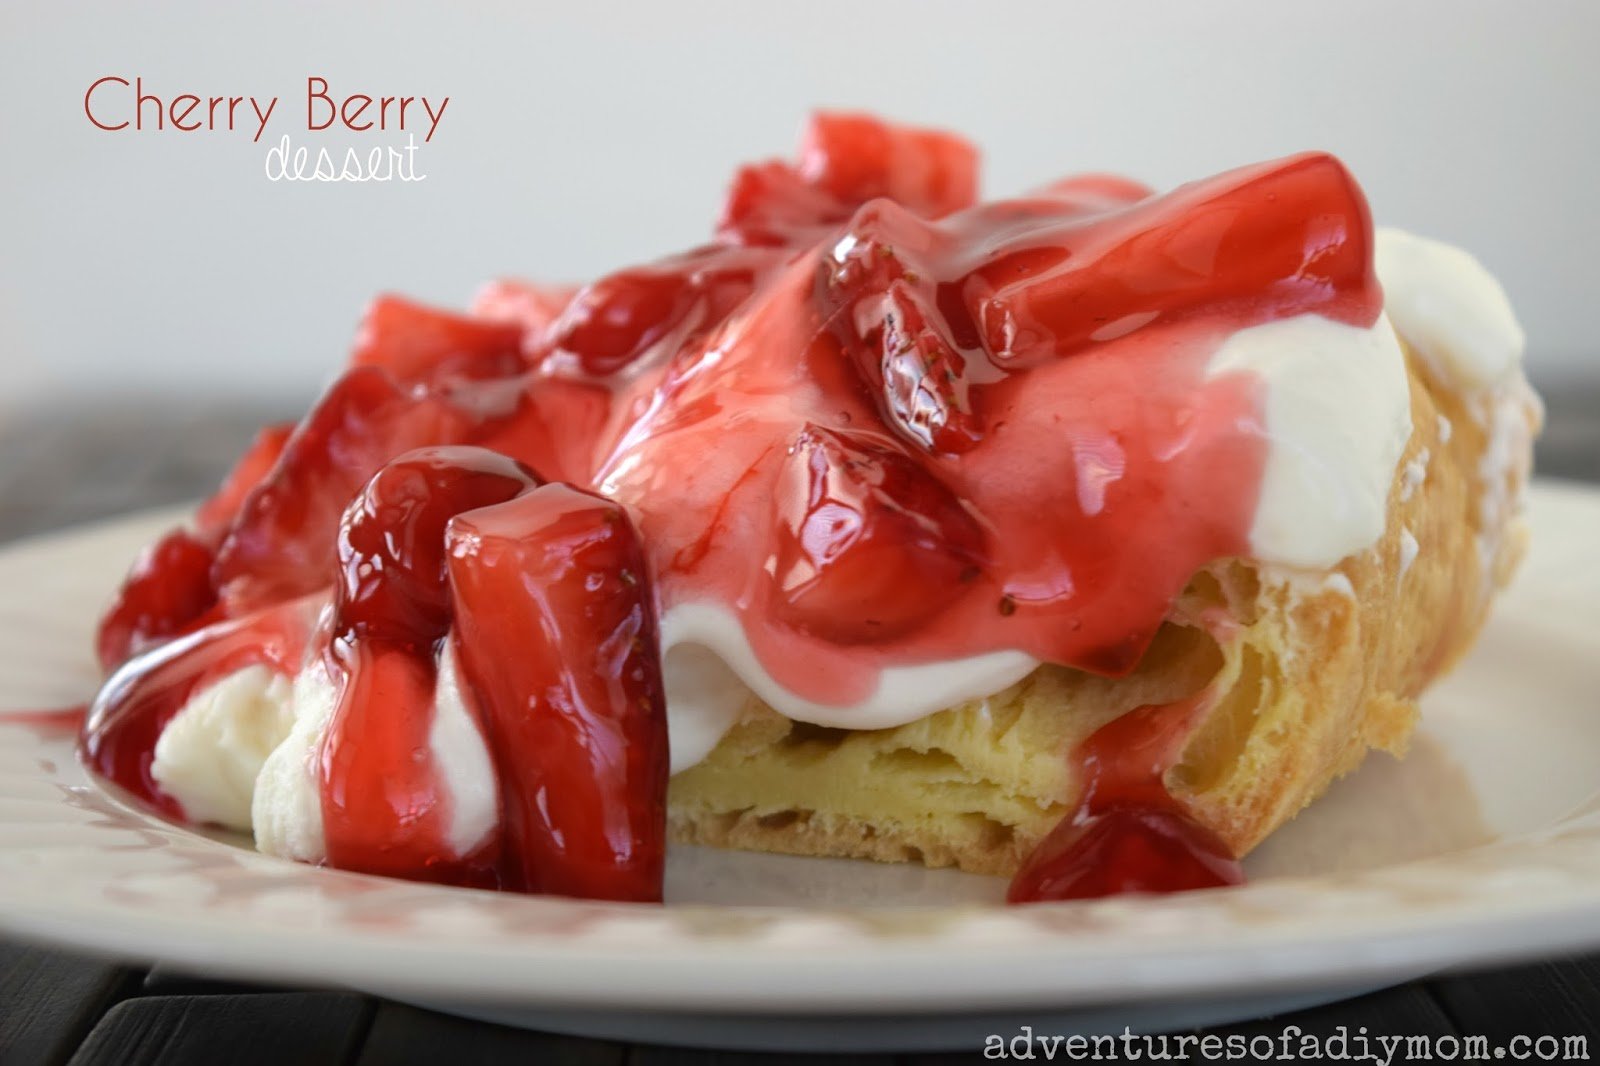 Cherry Berry Dessert #cherry #berries #dessert #recipe #tableforsevenblog @prnielsen